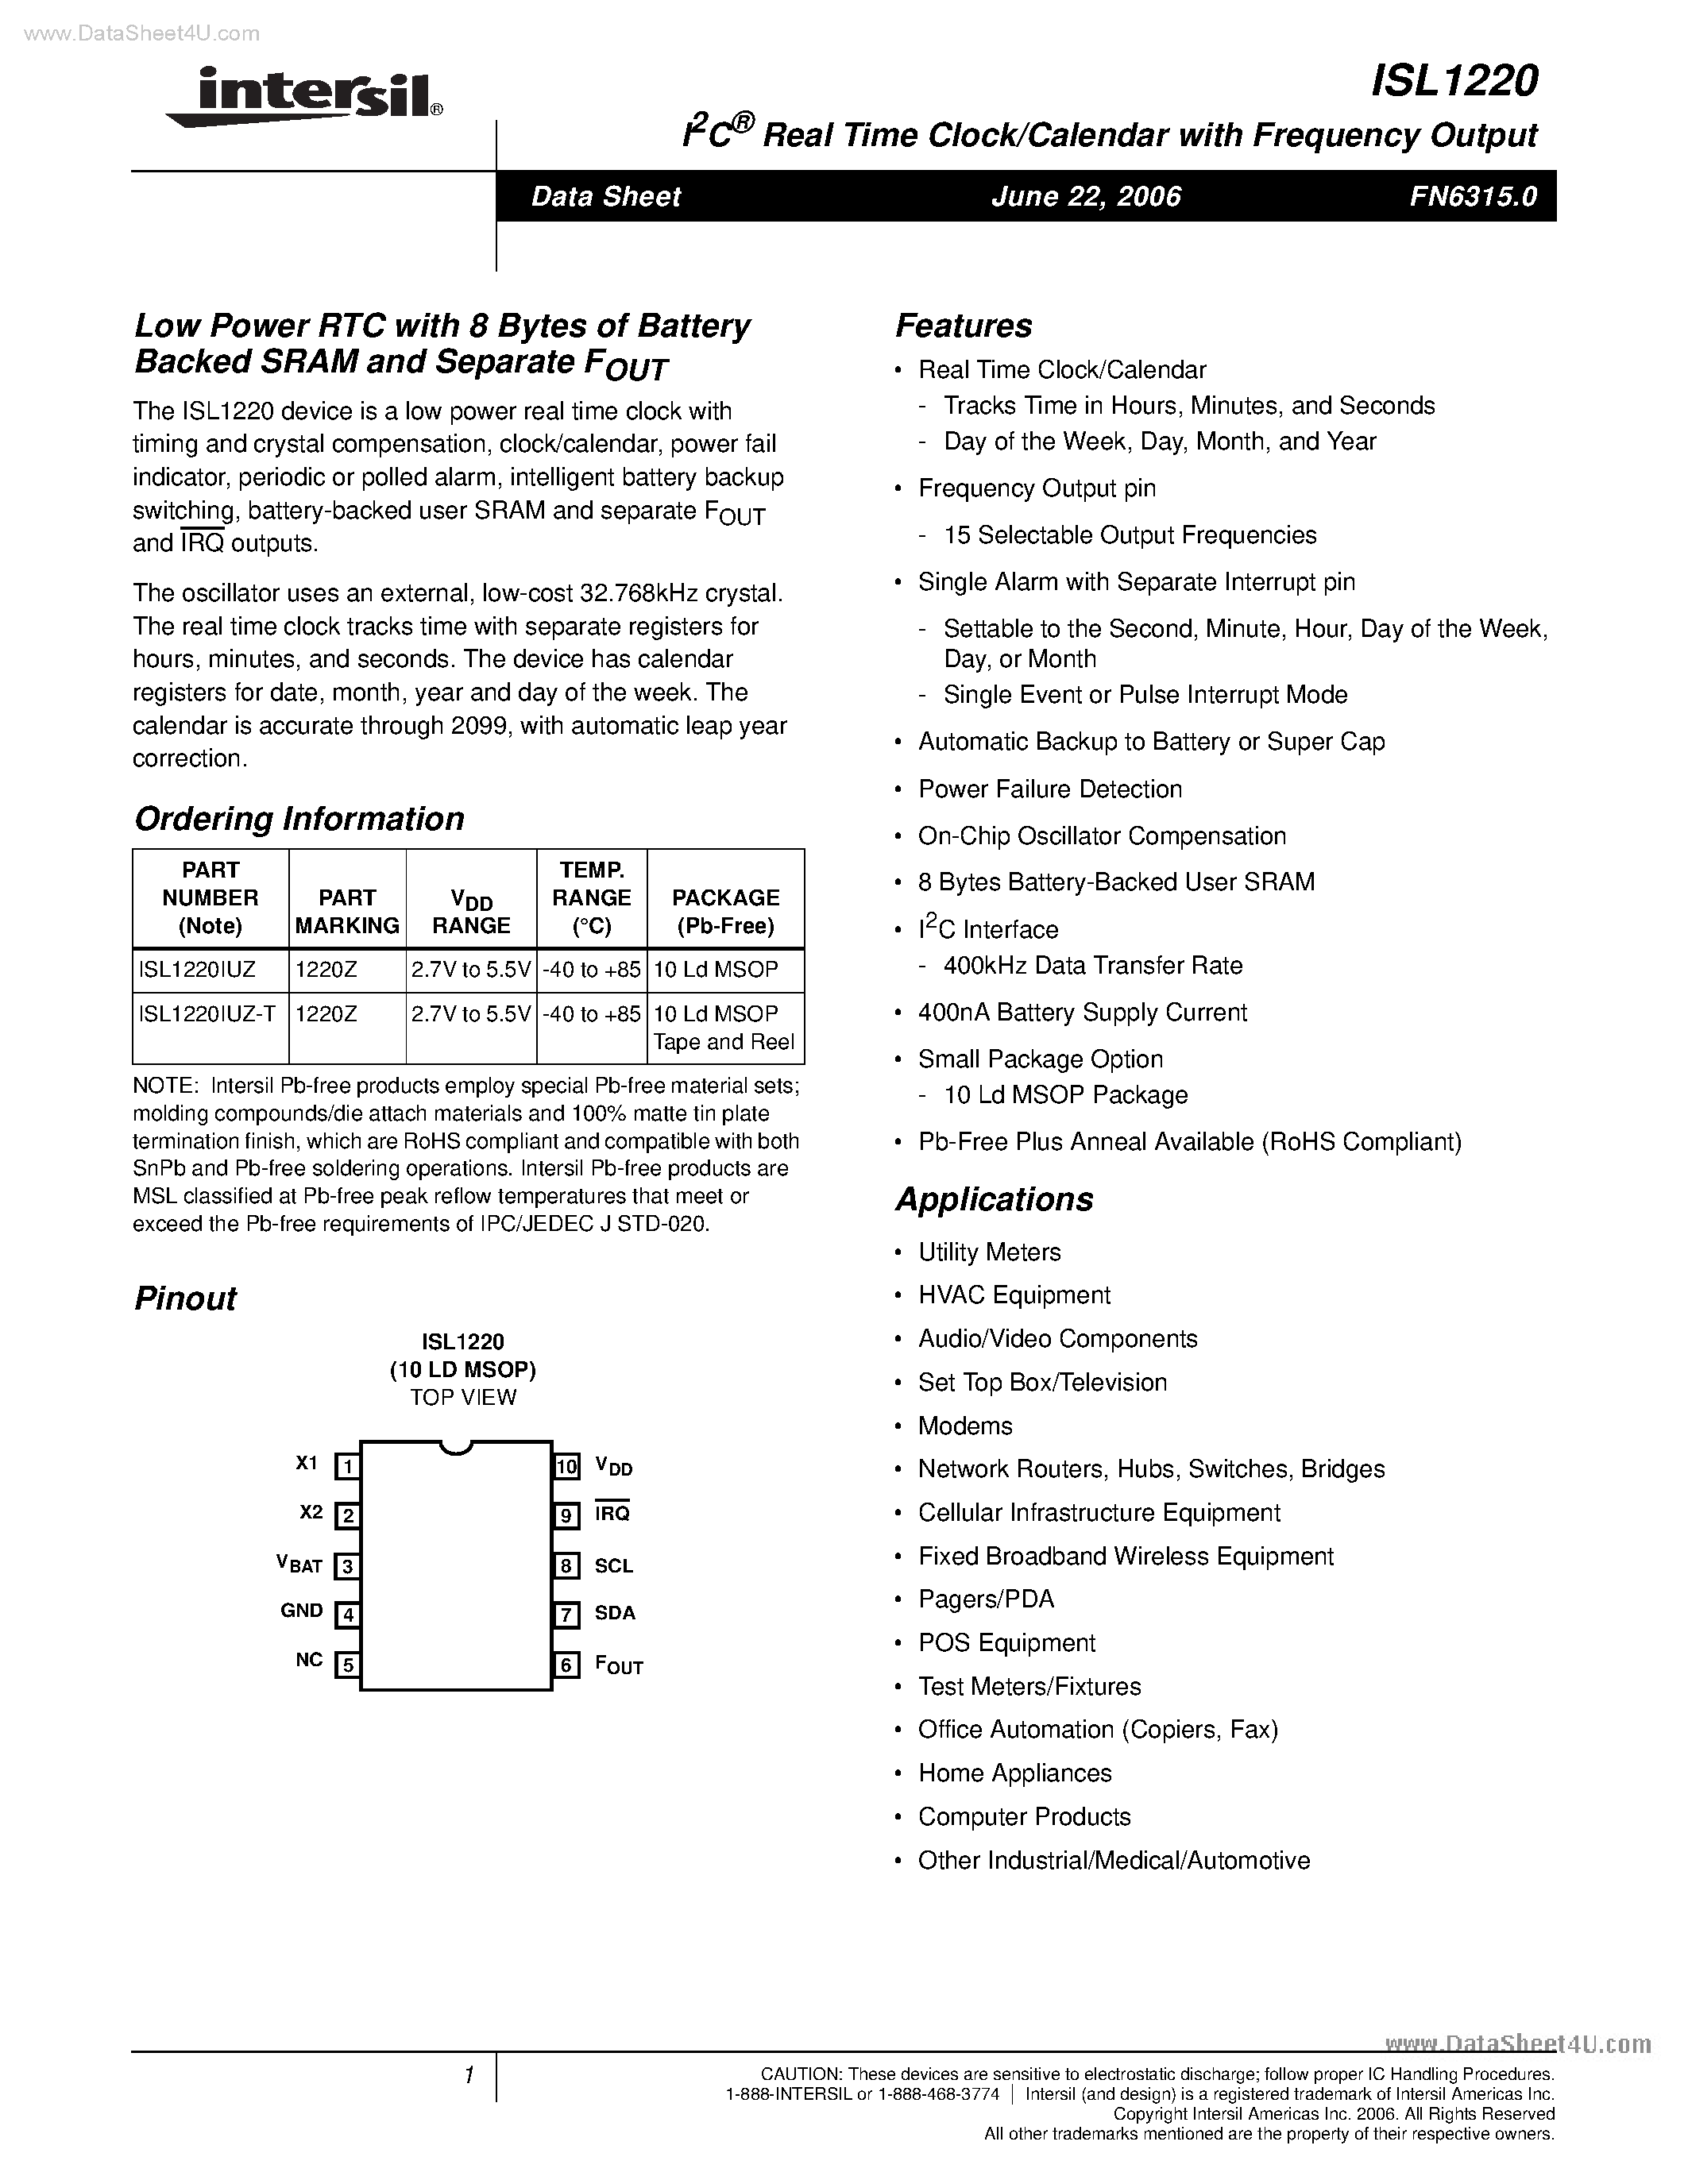 Datasheet ISL1220 - I2C Real Time Clock/Calendar page 1